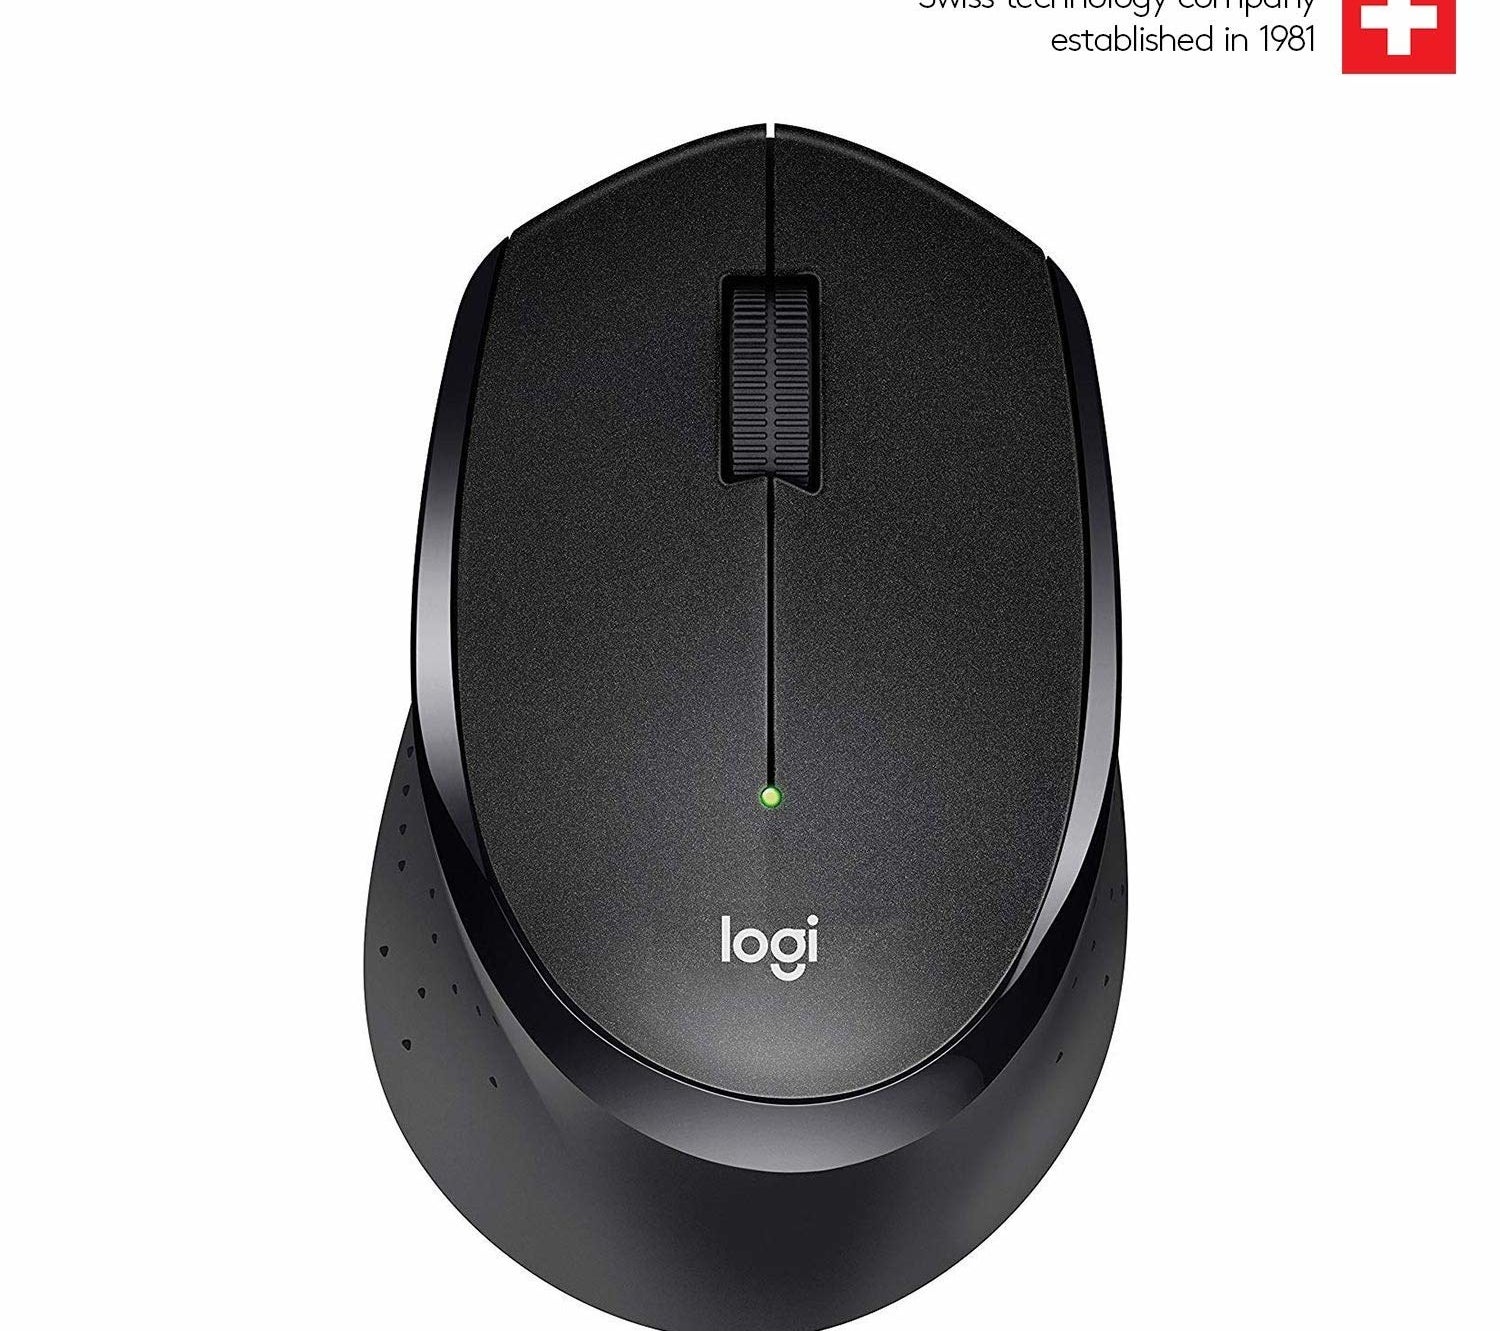 A black wireless ergonomic mouse.